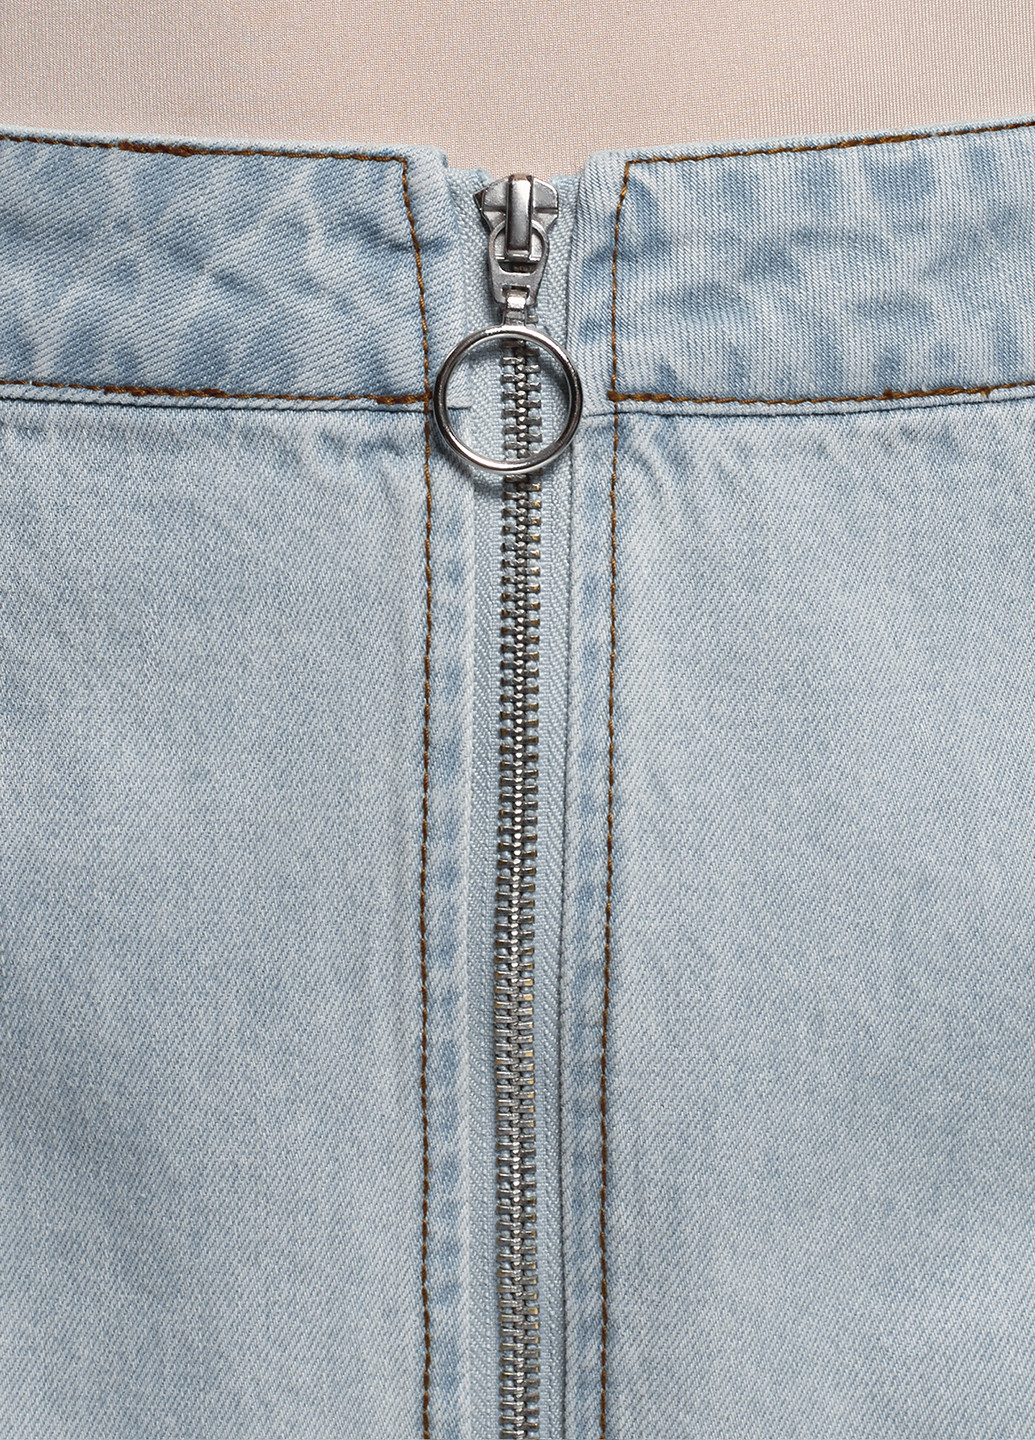 Синяя джинсовая однотонная юбка Oodji мини